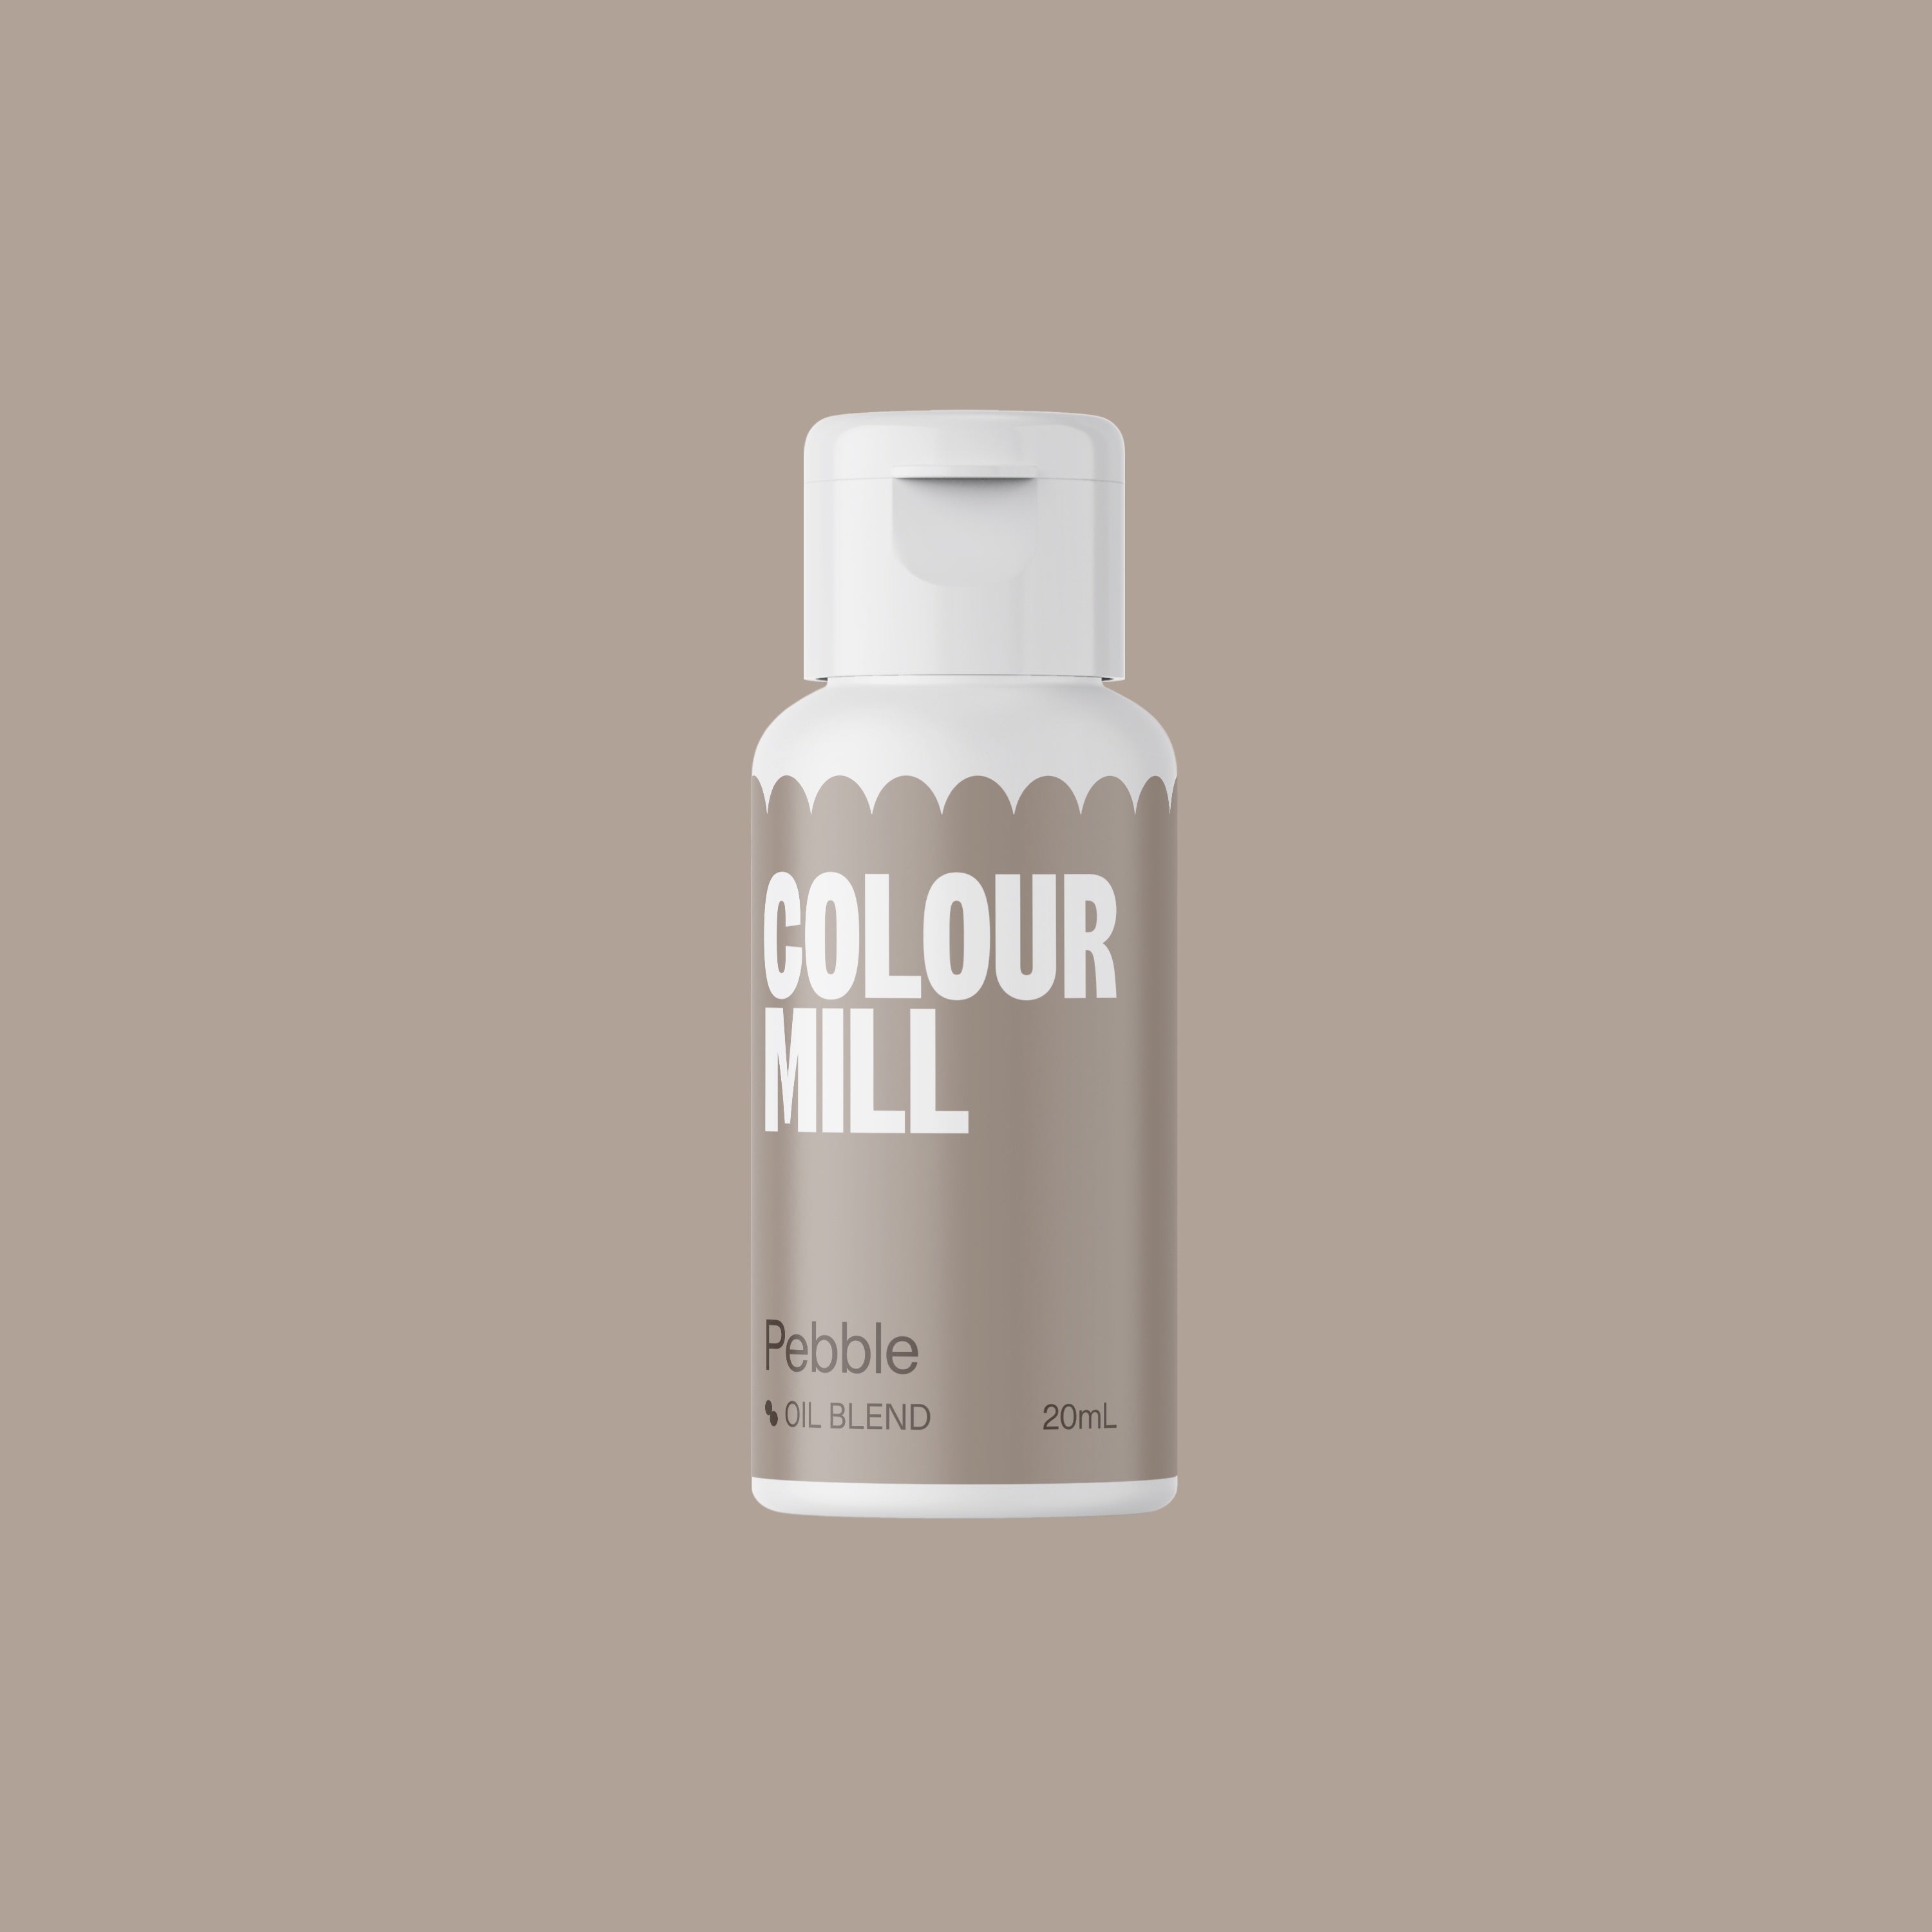 Colour Mill Oil Based Colouring Pebble (20ml)